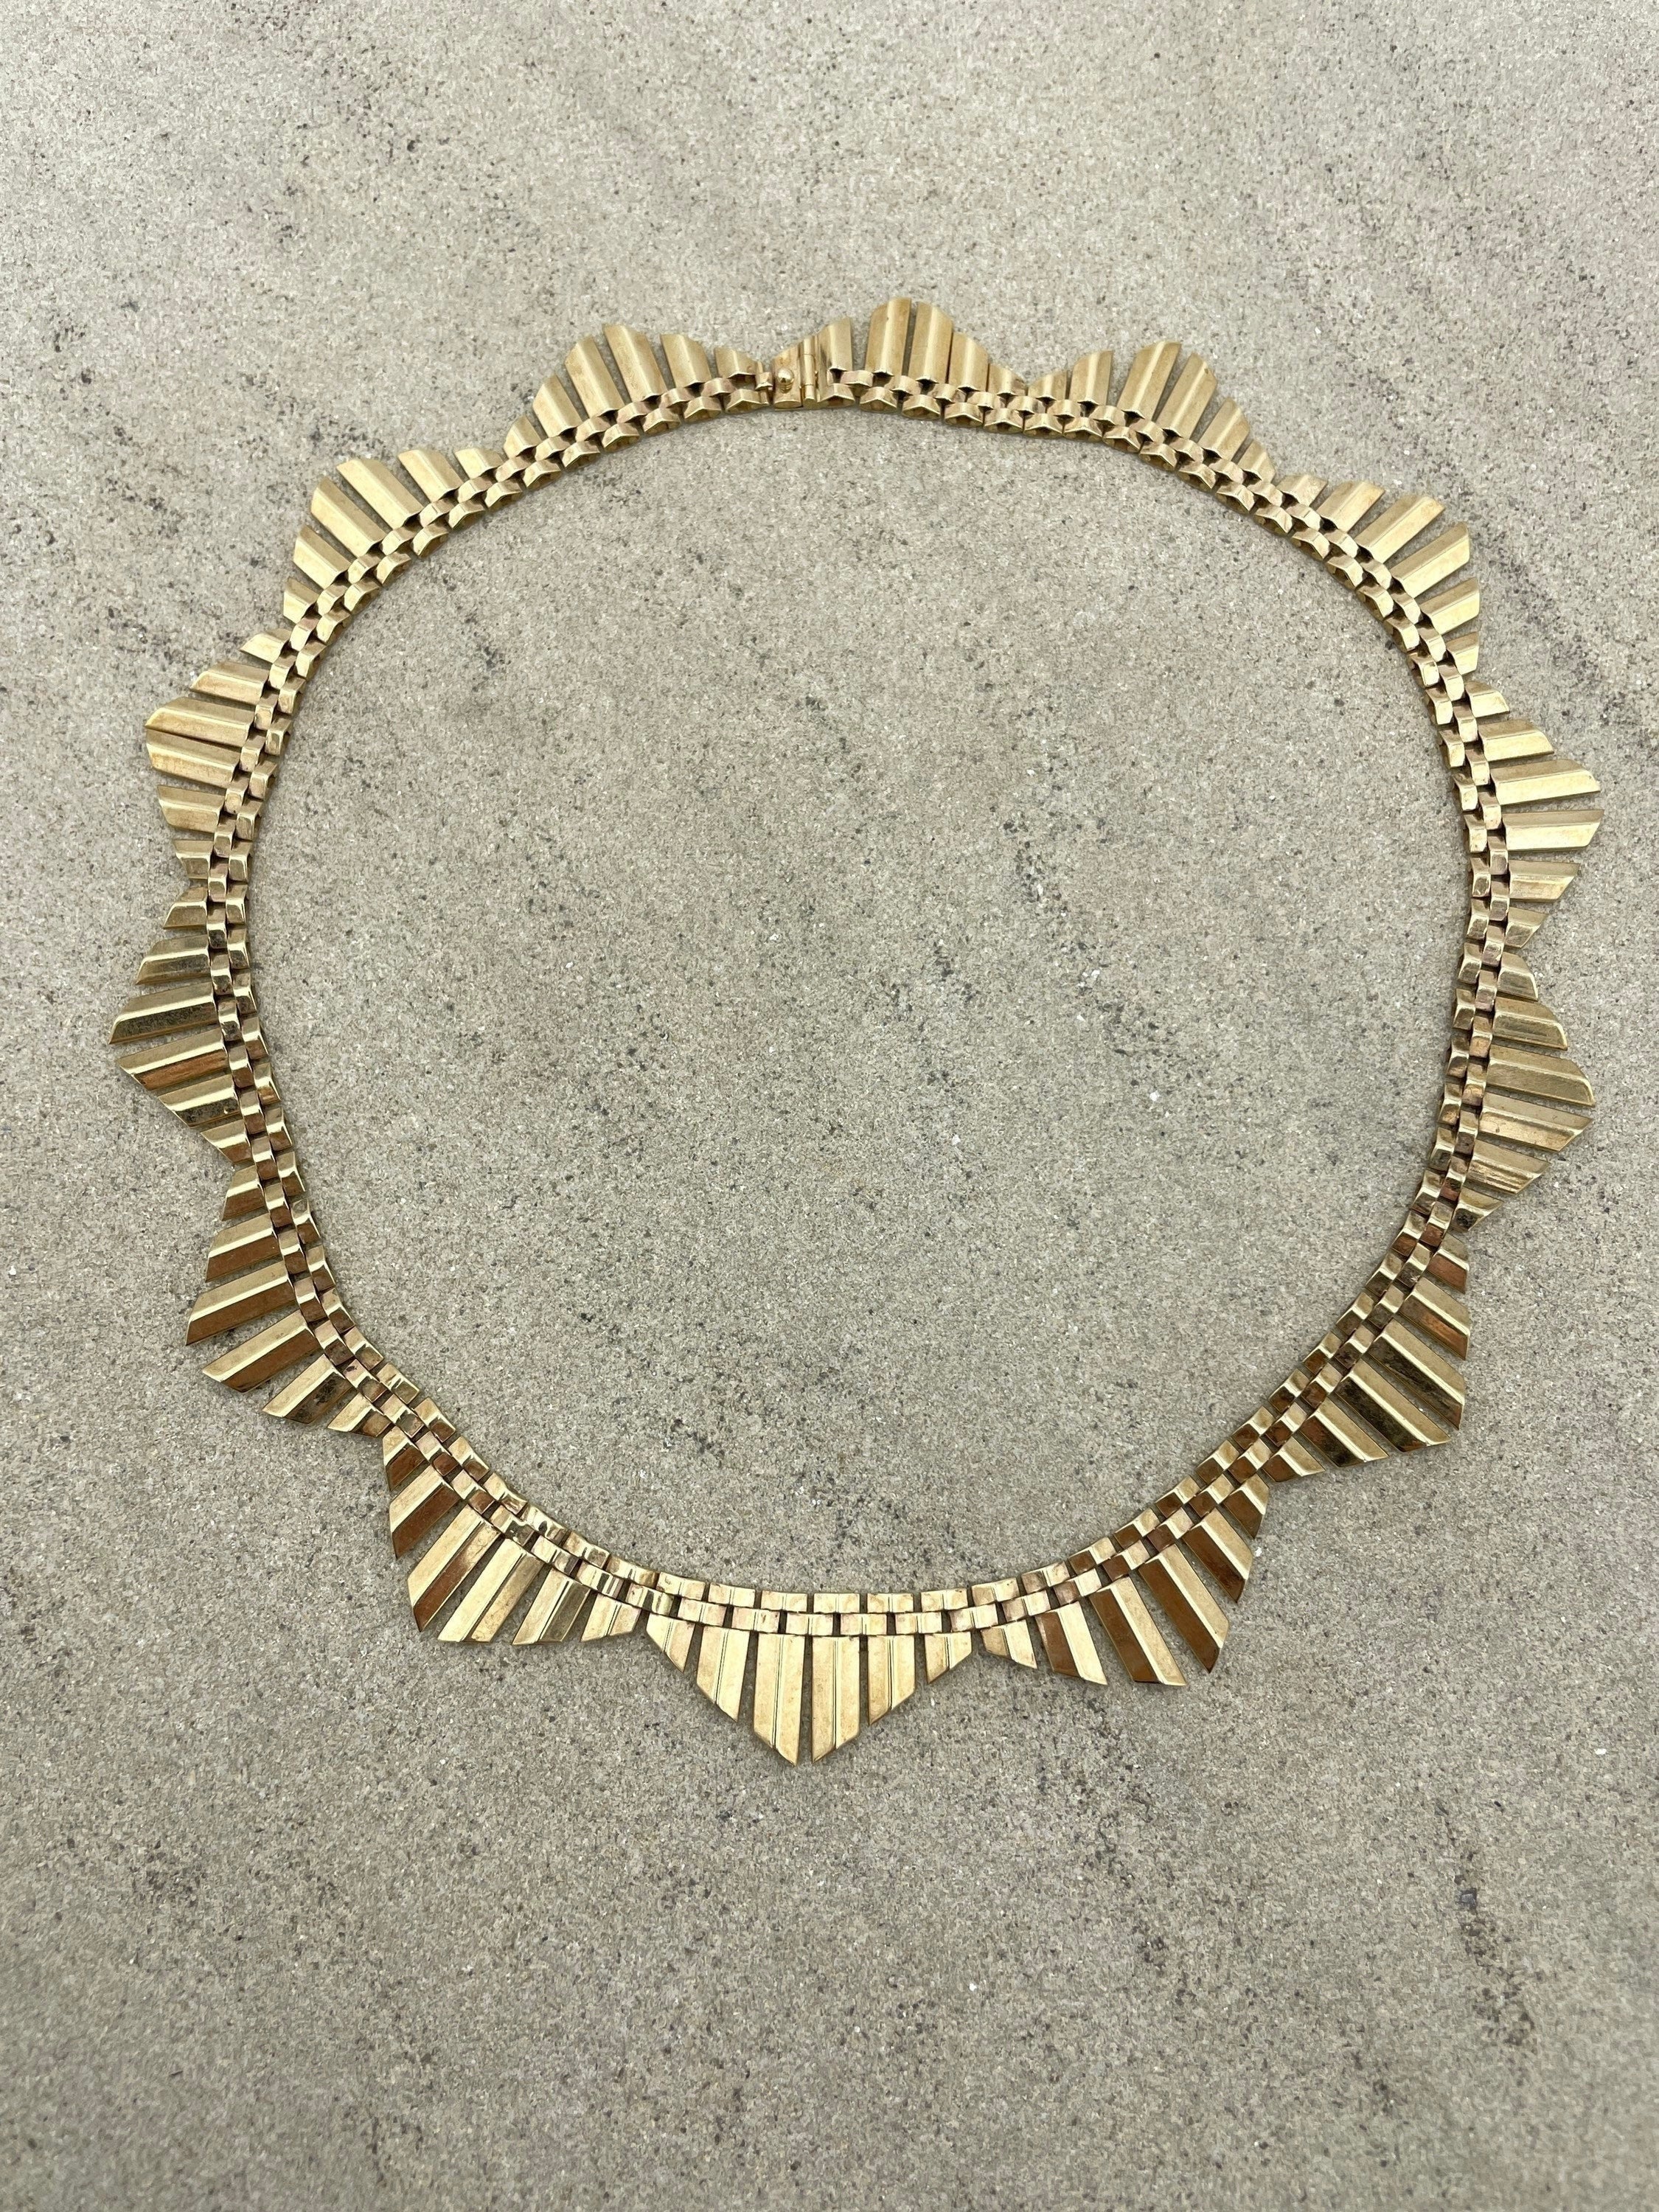 1950s, Vintage 9ct Gold Collar Necklace. London hallmark 1955